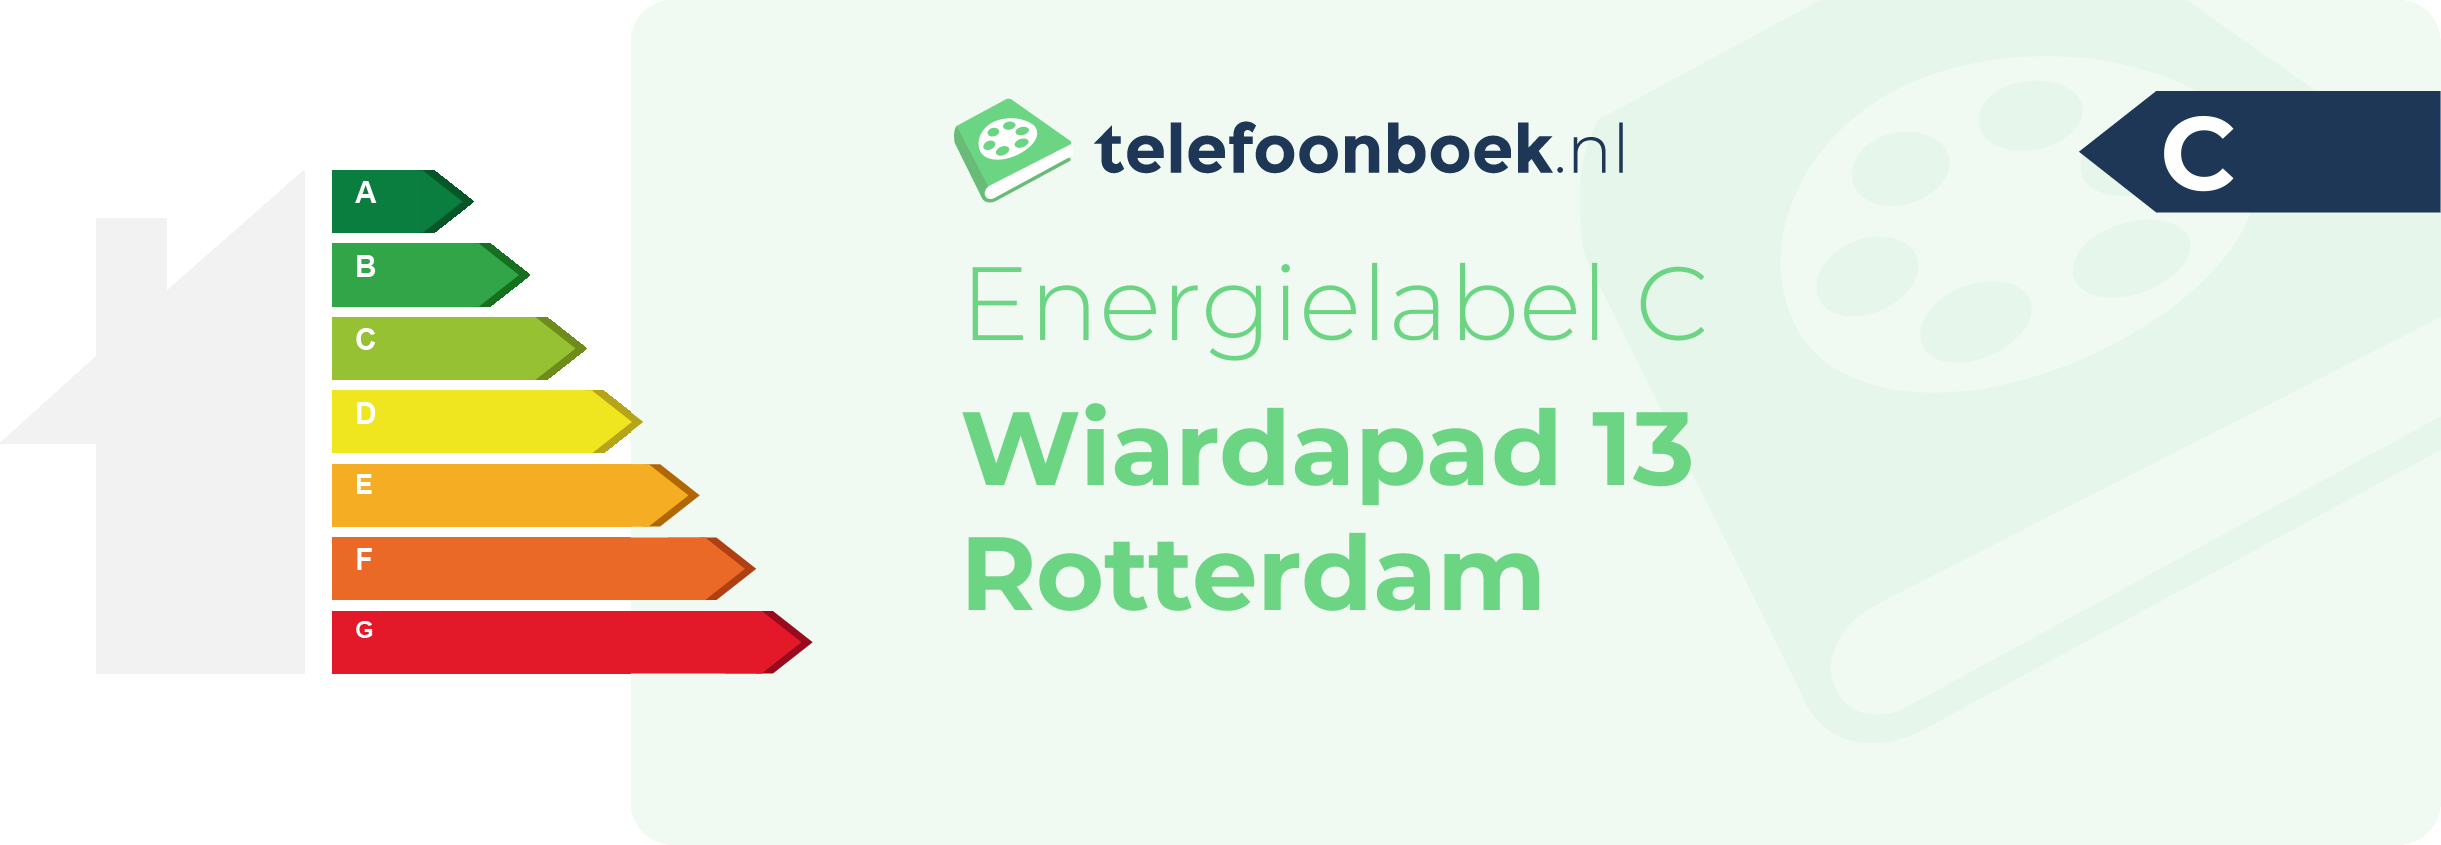 Energielabel Wiardapad 13 Rotterdam